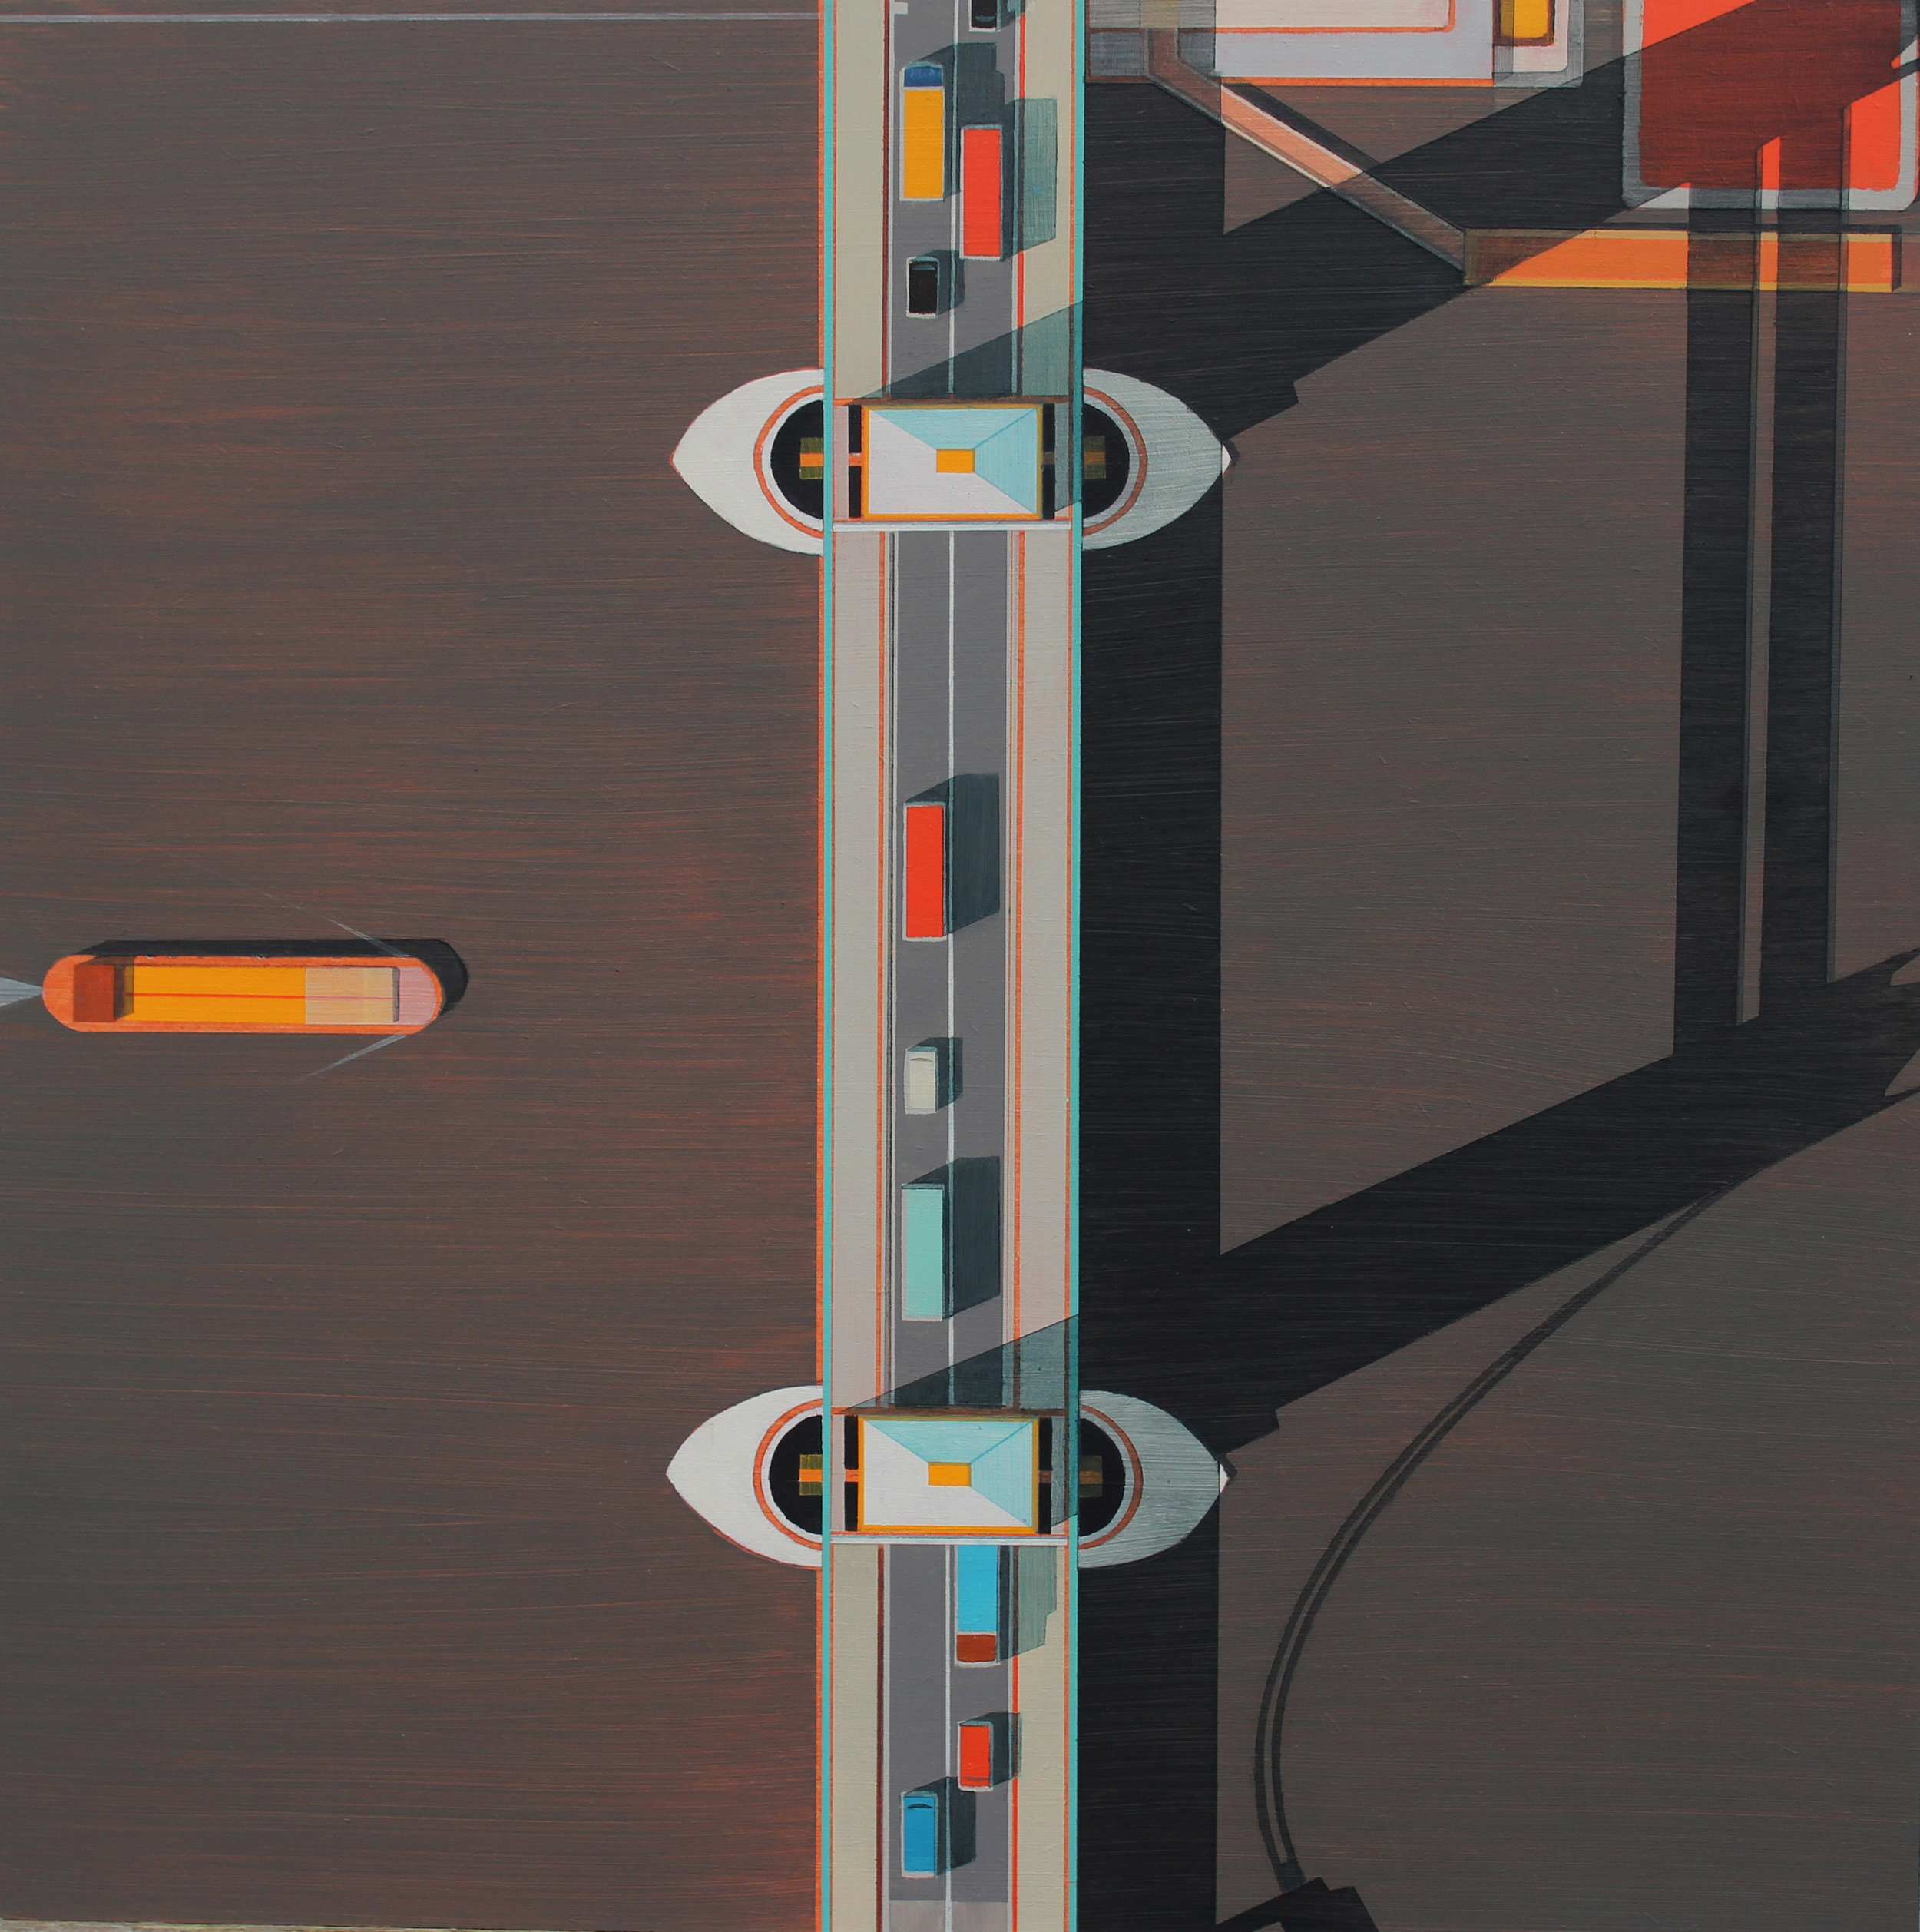 WEB-Tower-Bridge-and-yellow-barge-2017-acrylic-on-board-45x45-cm.jpg